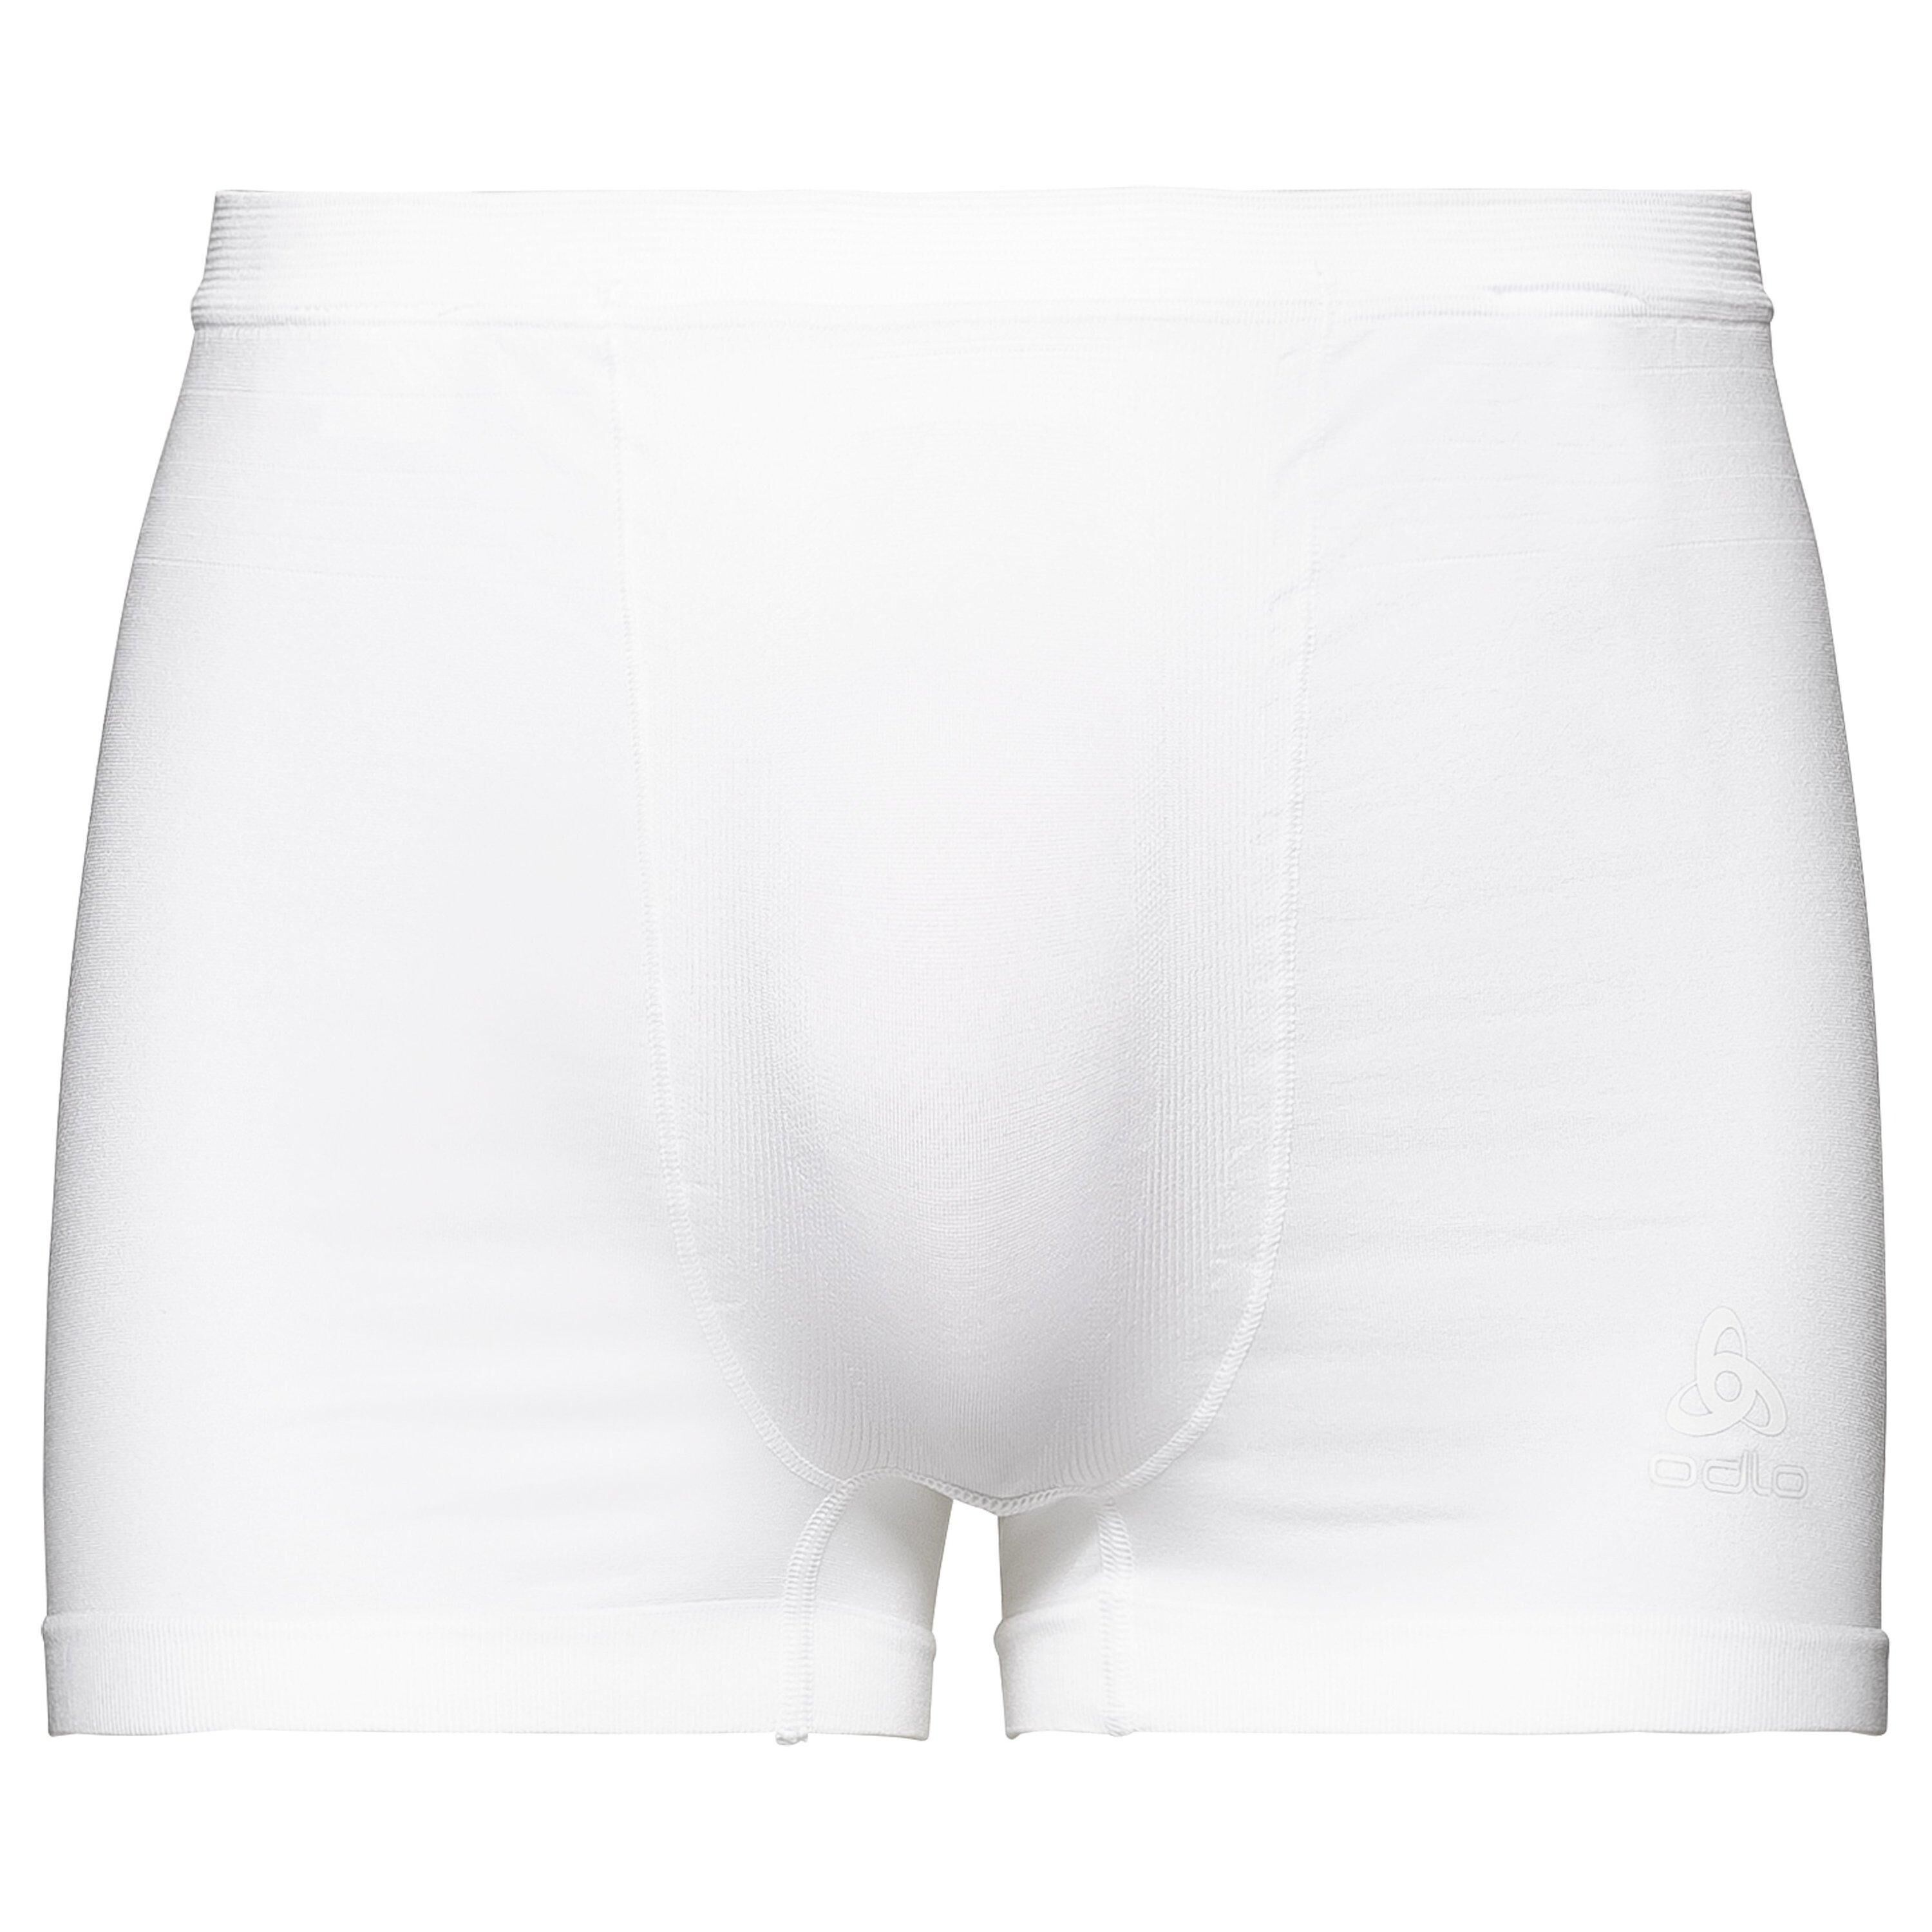 Odlo Performance Light - Underwear - Men's